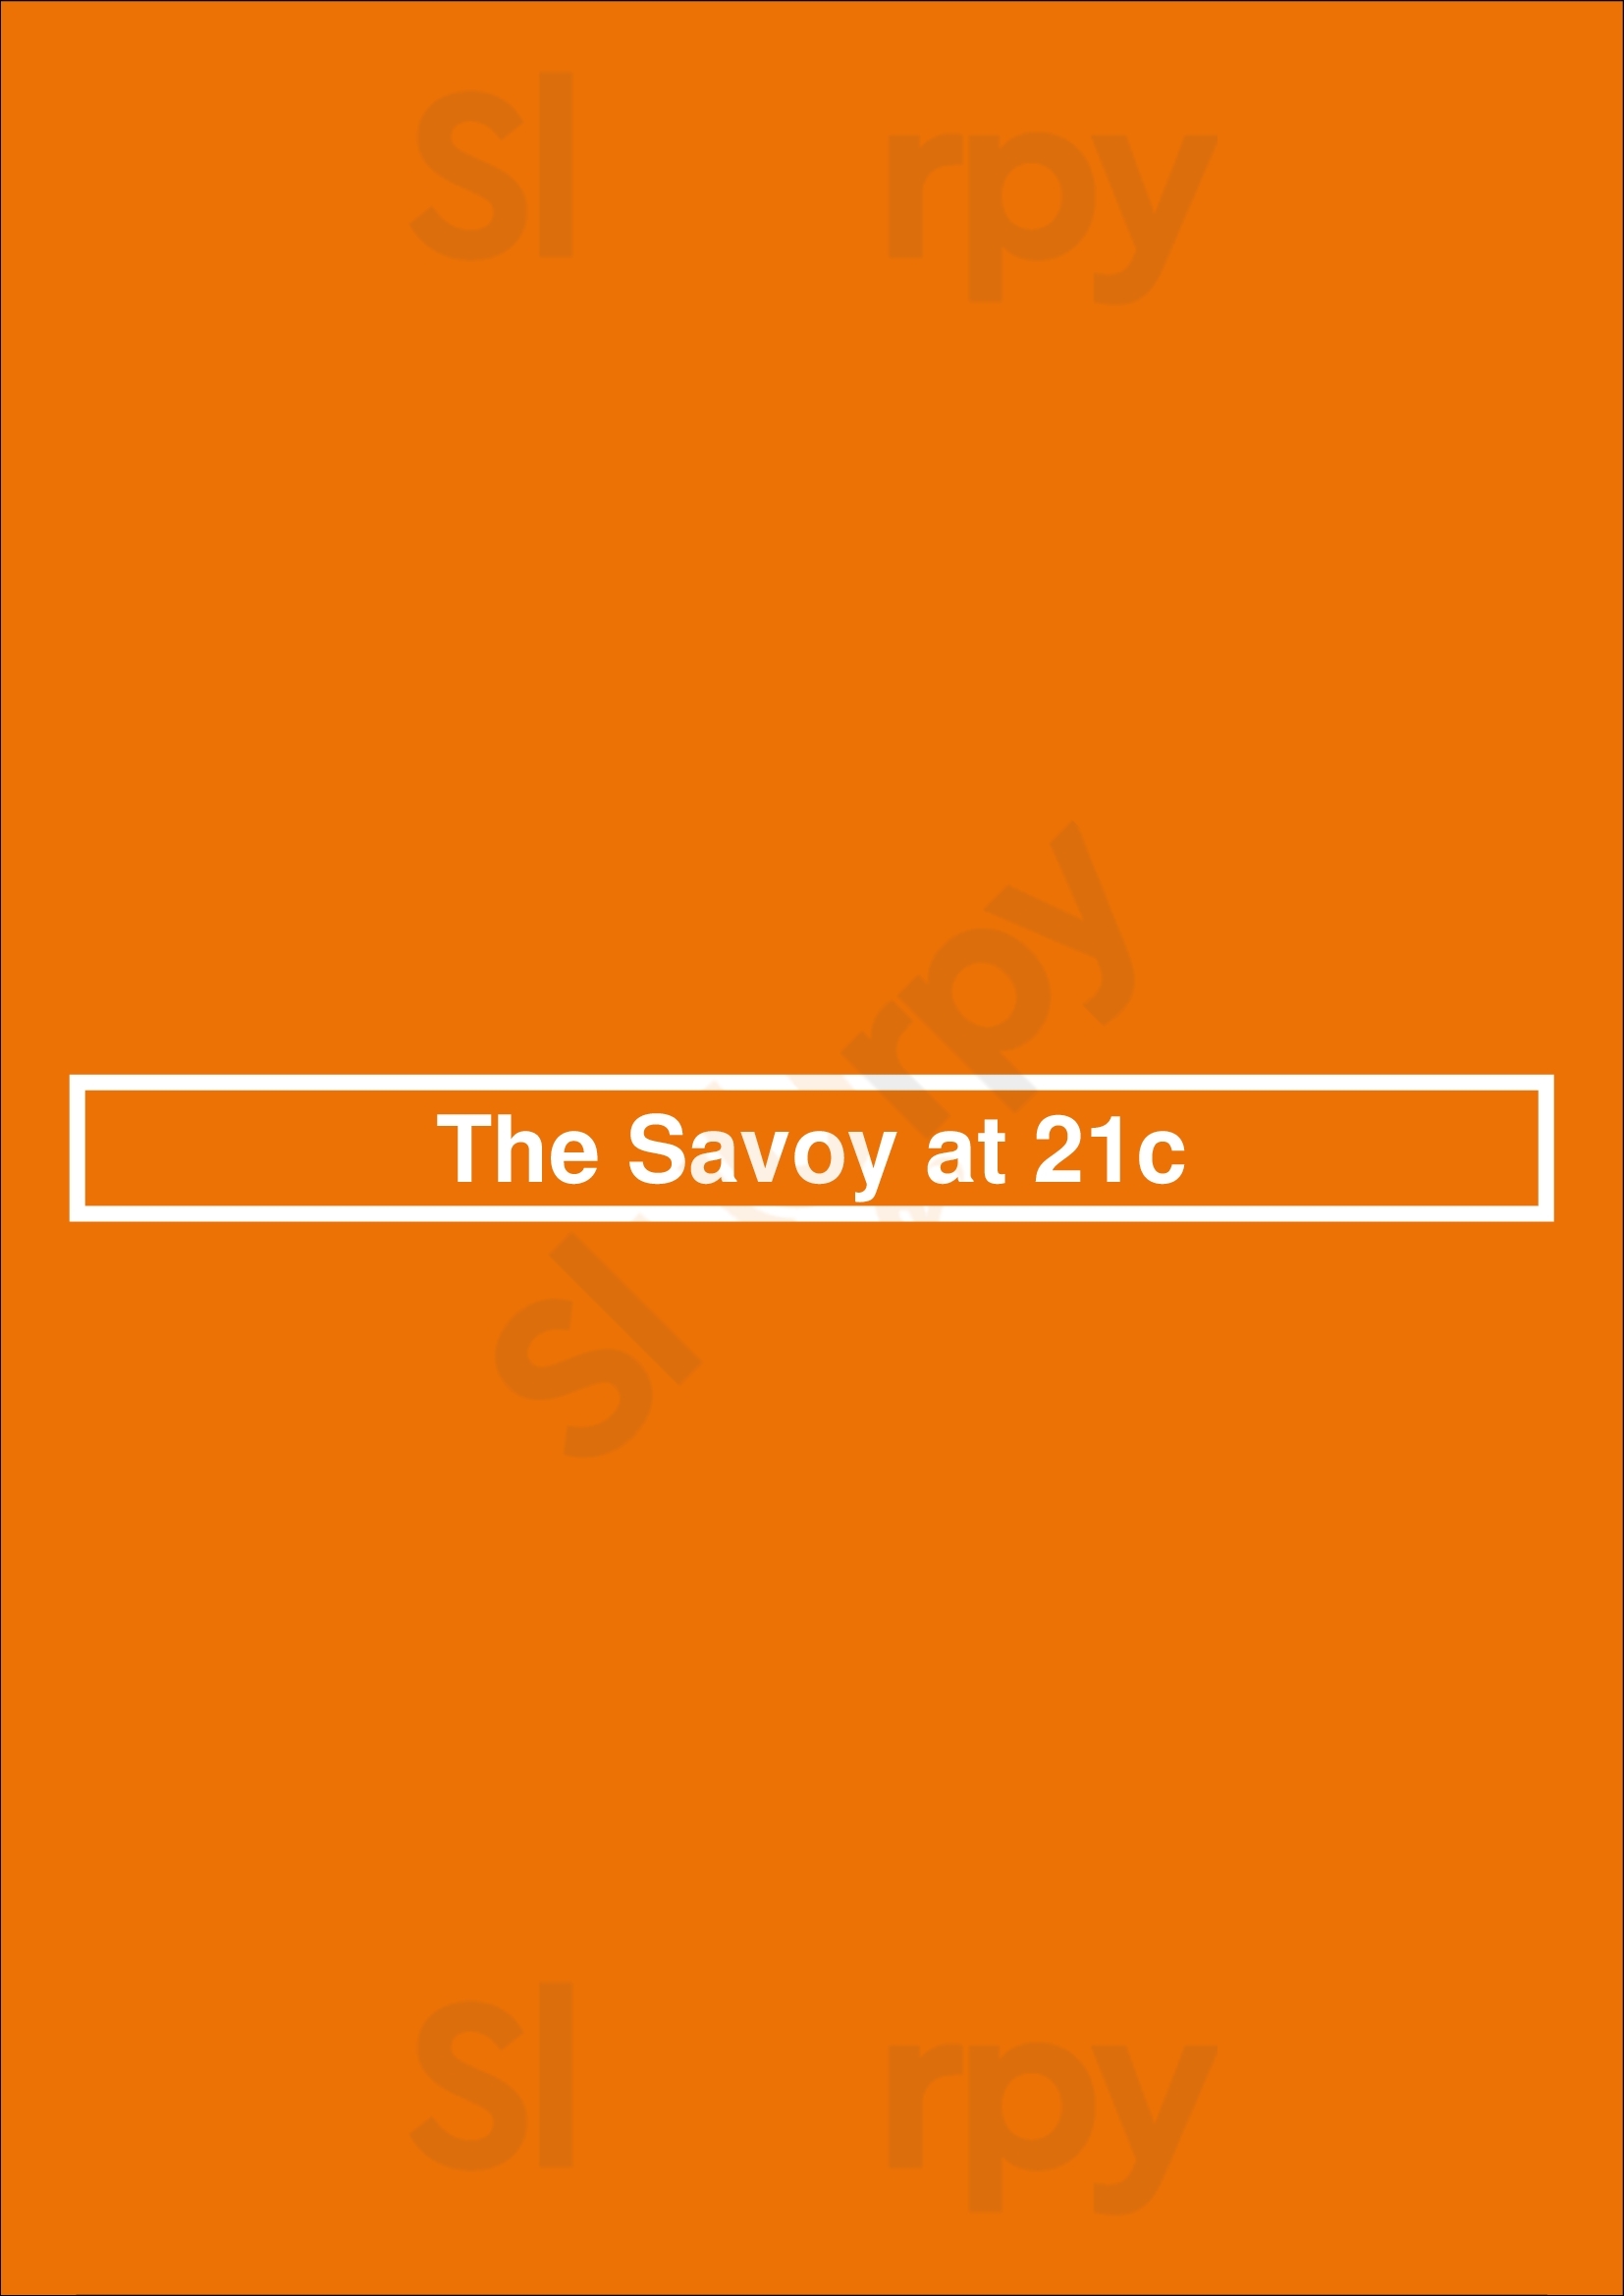 The Savoy At 21c Kansas City Menu - 1